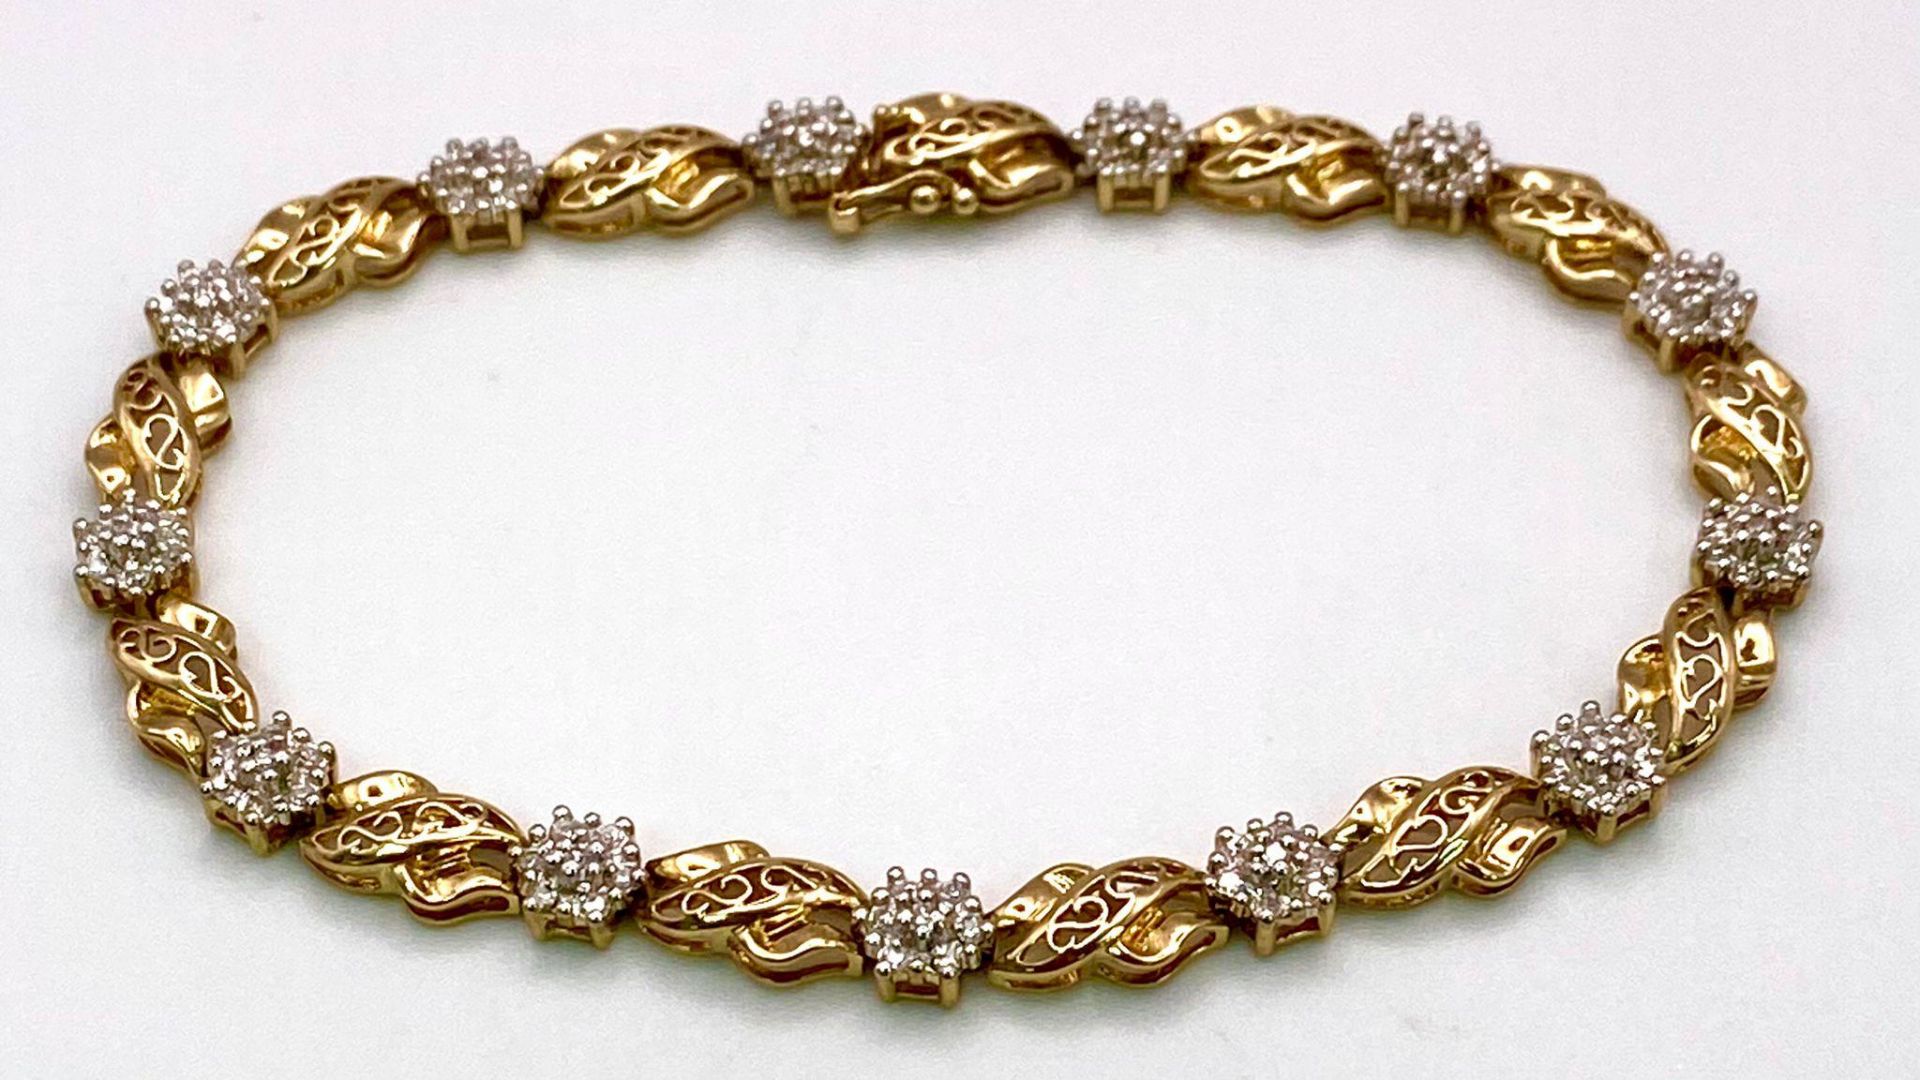 9K Yellow Gold Diamond, 0.65CT, Set Bracelet. Length: 18cm Weight: 9.7g SC-3067 - Image 6 of 9